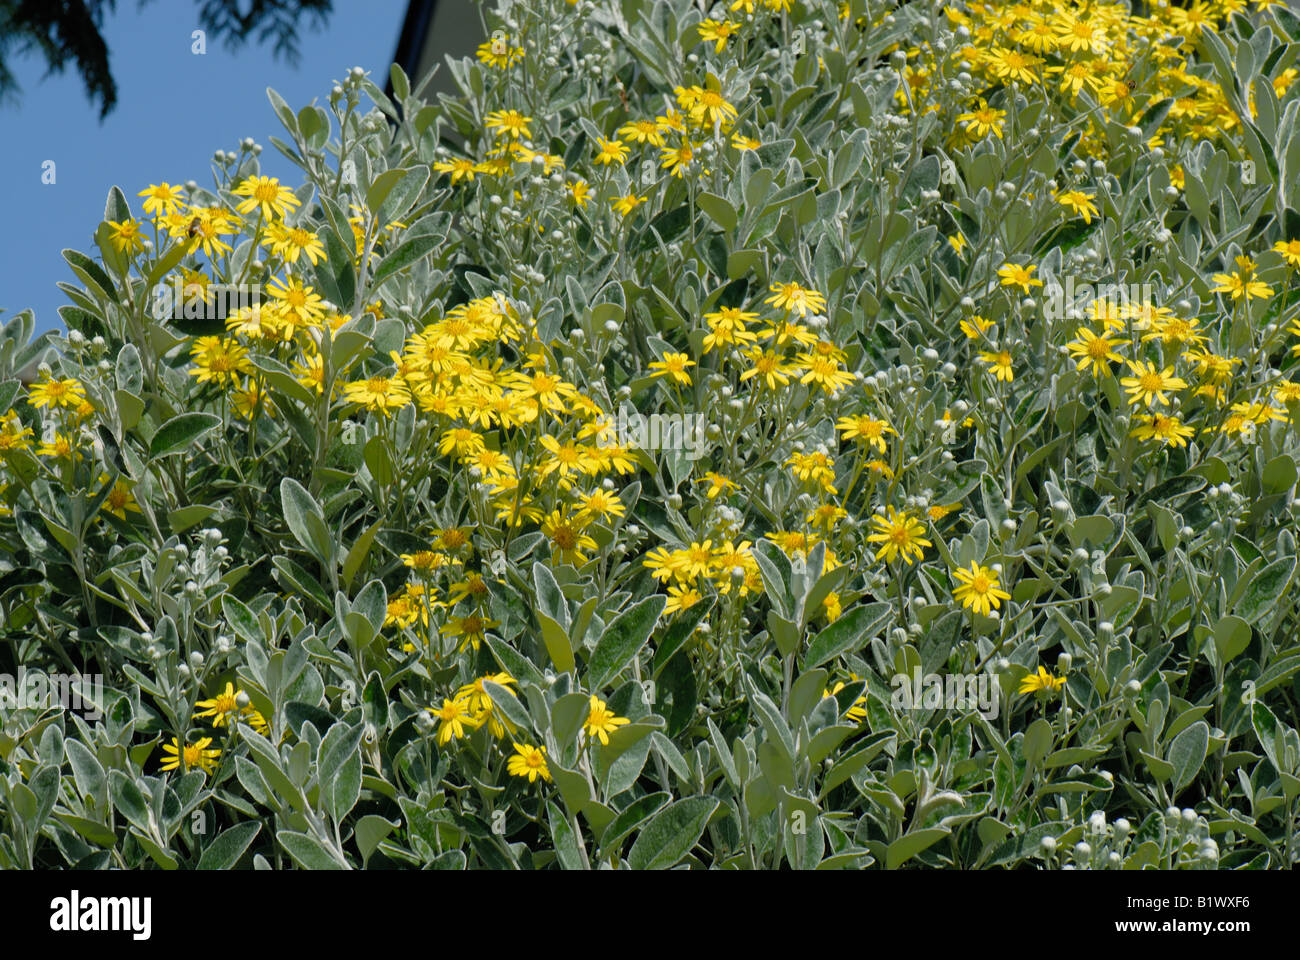 Arbusto De follaje gris difundiendo Brachyglottis Dunedin Grupo Sol en flor amarilla Foto de stock